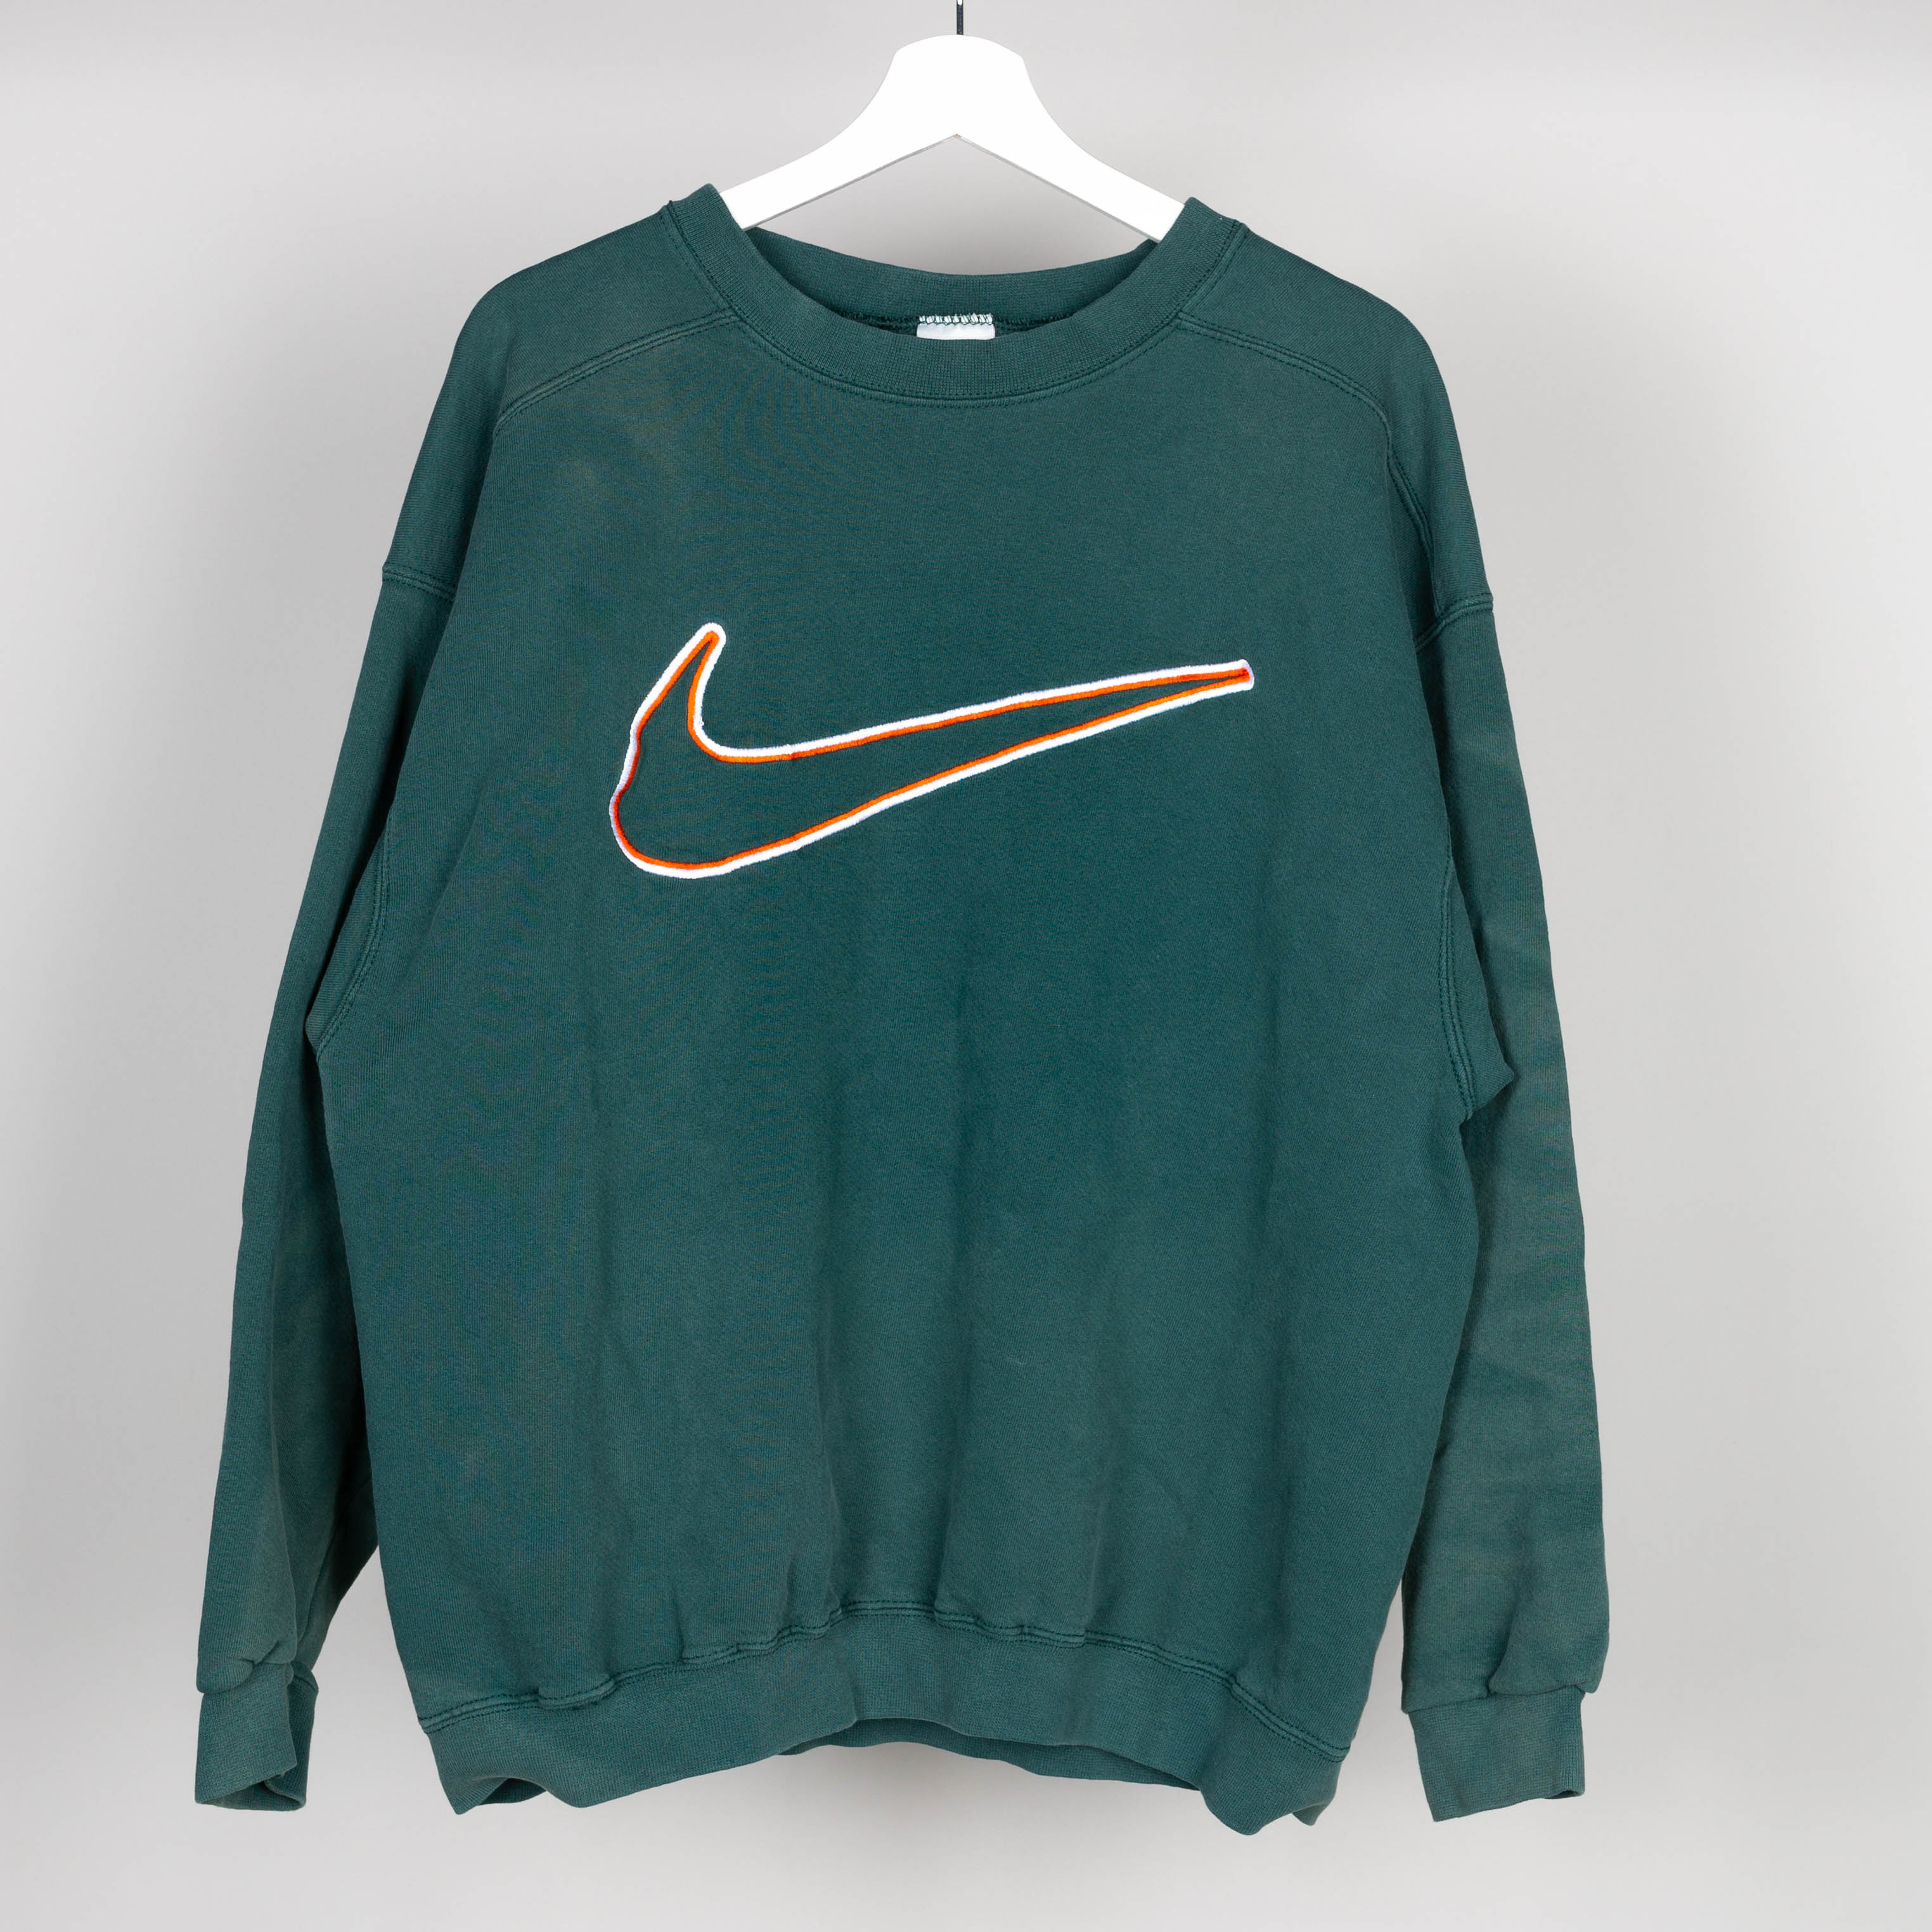 90's Green Nike Crewneck Size L